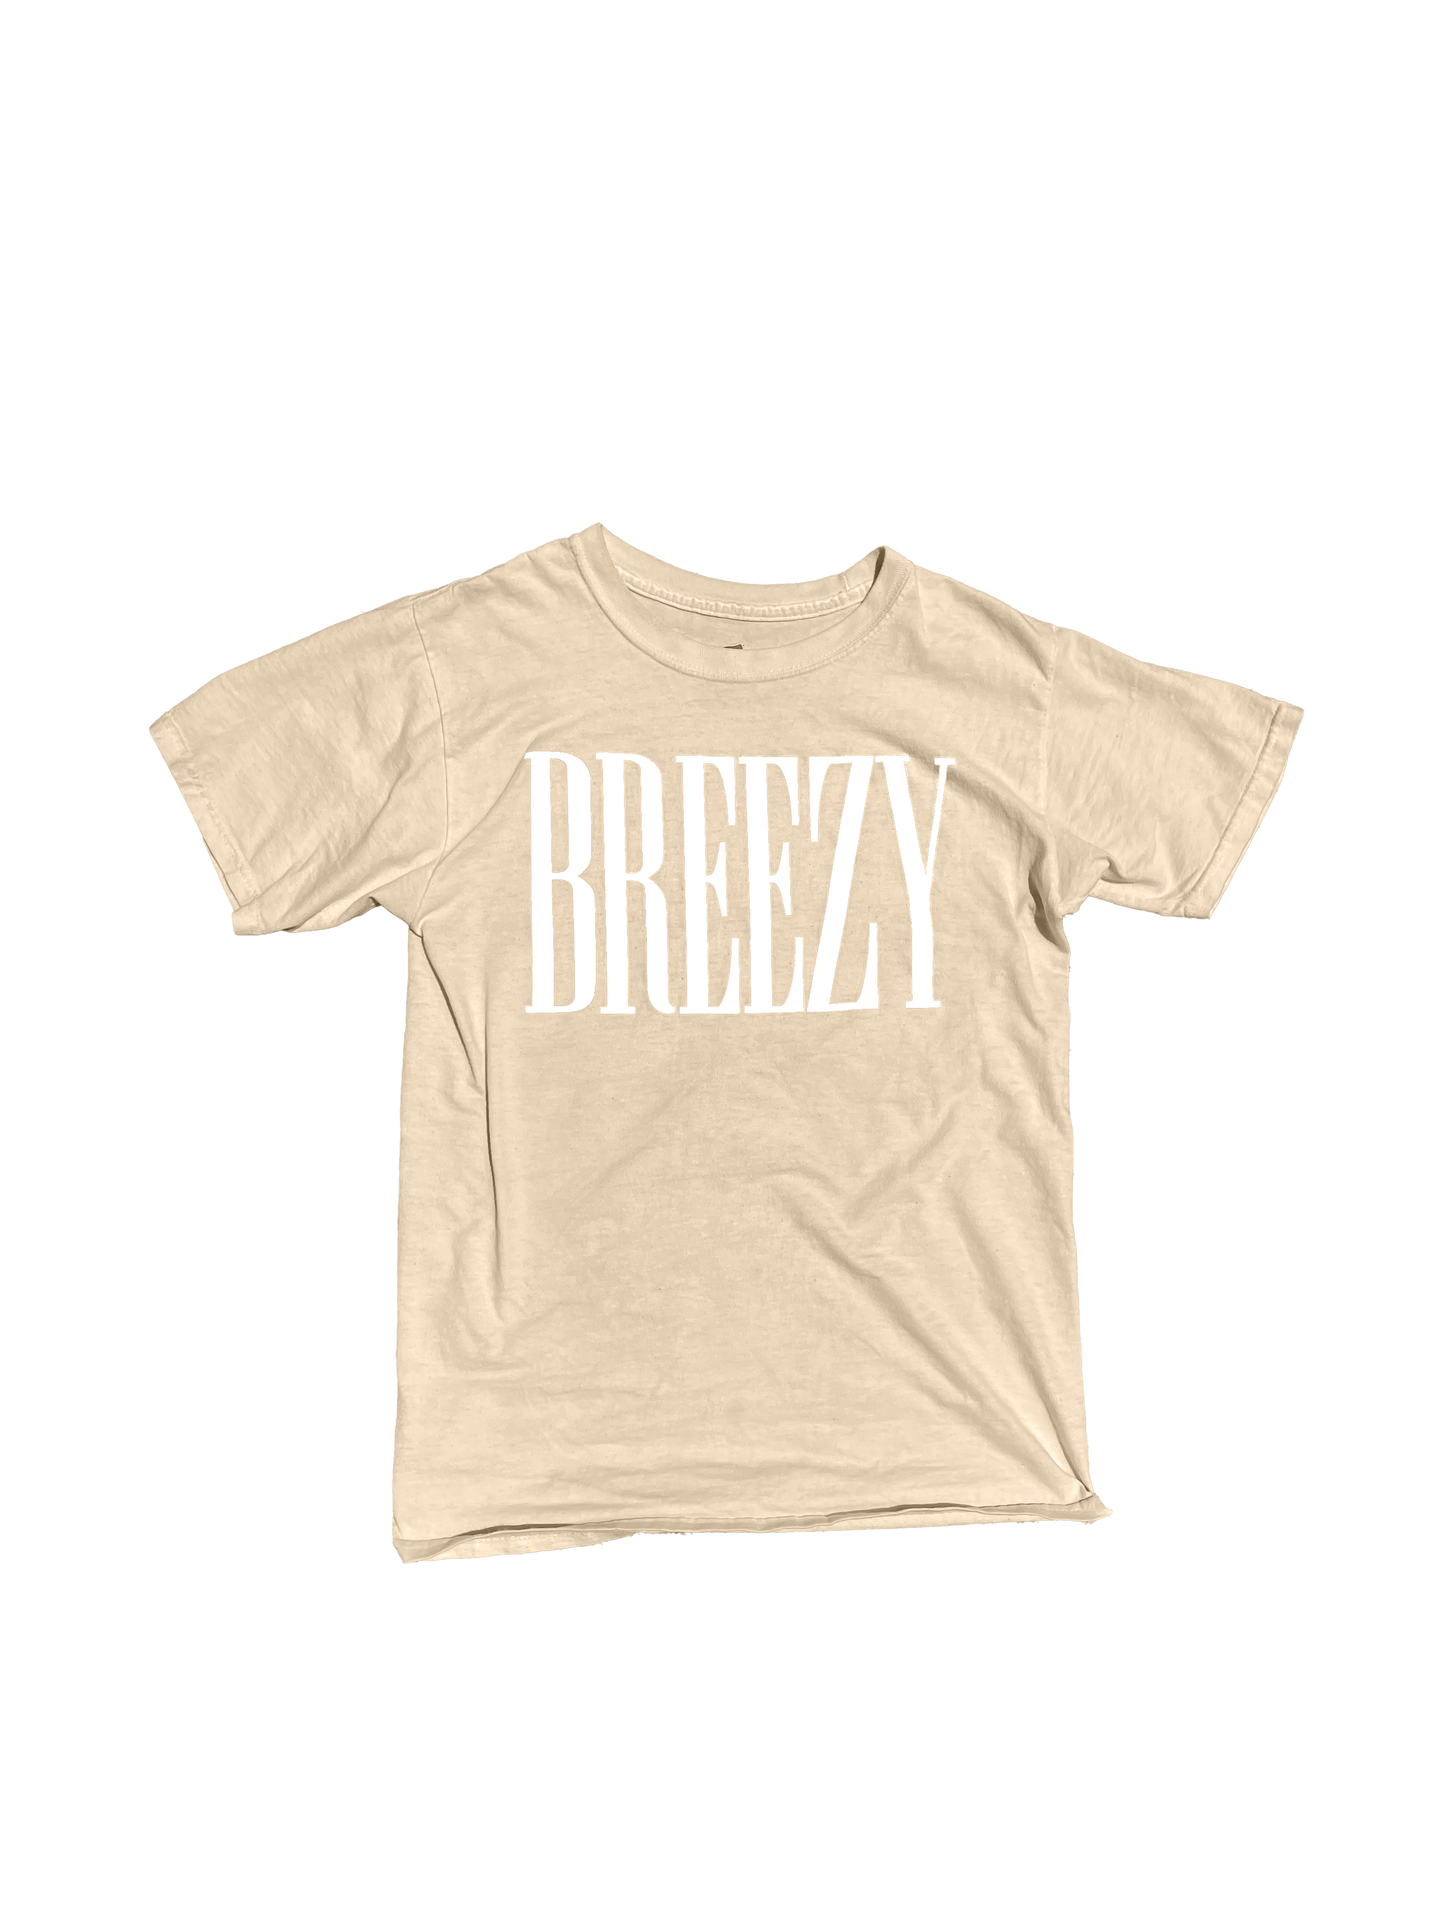 Cream Breezy T-Shirt - Breezy Season 